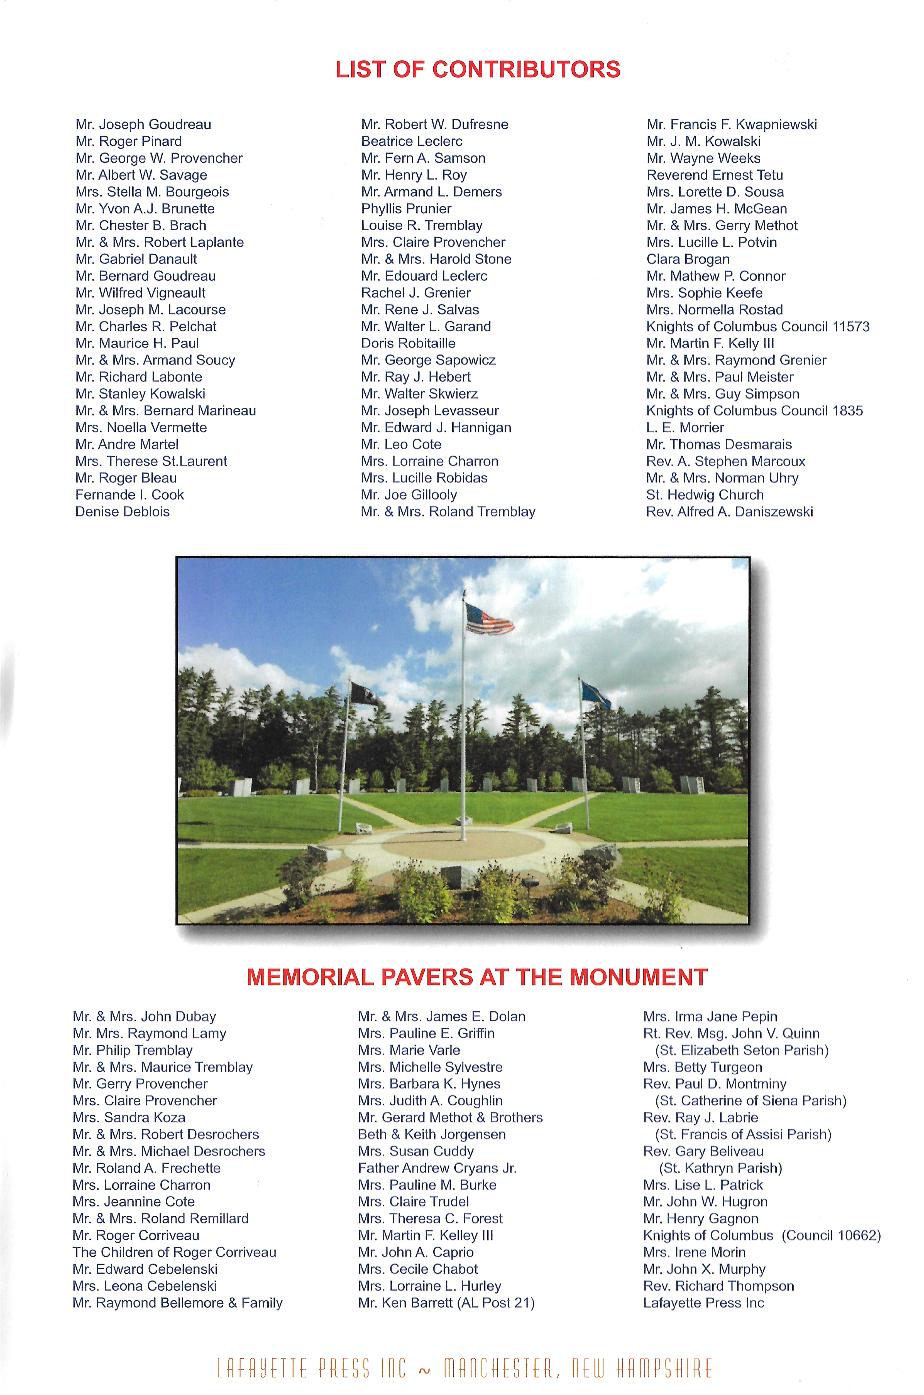 Nh State Veterans Cemetery Catholic War Veterans Memorial Dedication